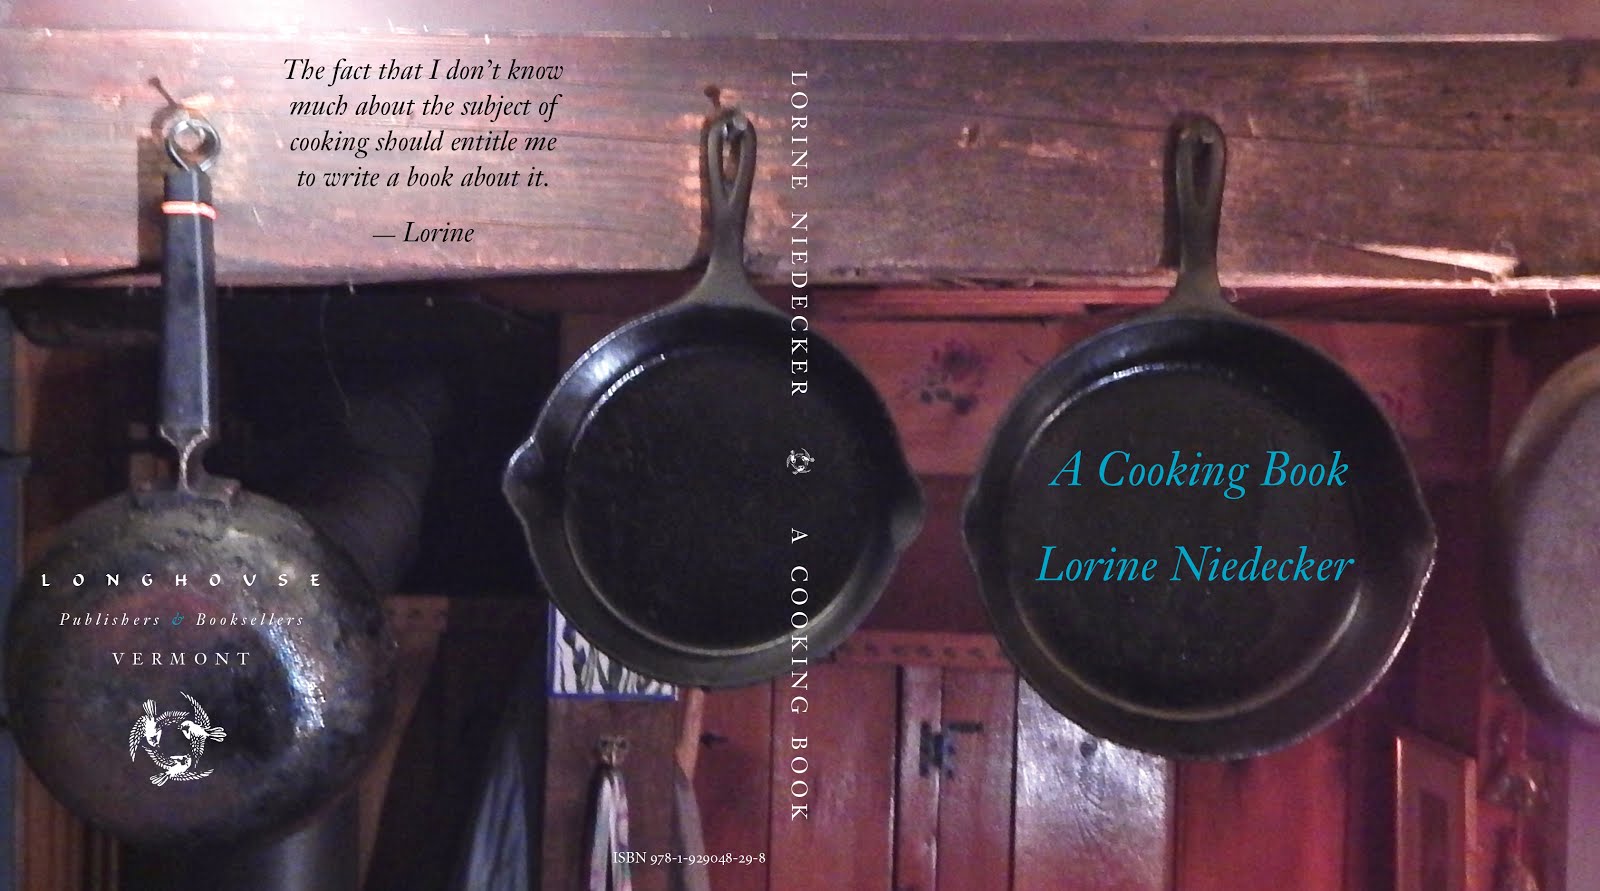 Lorine Niedecker's A Cooking Book